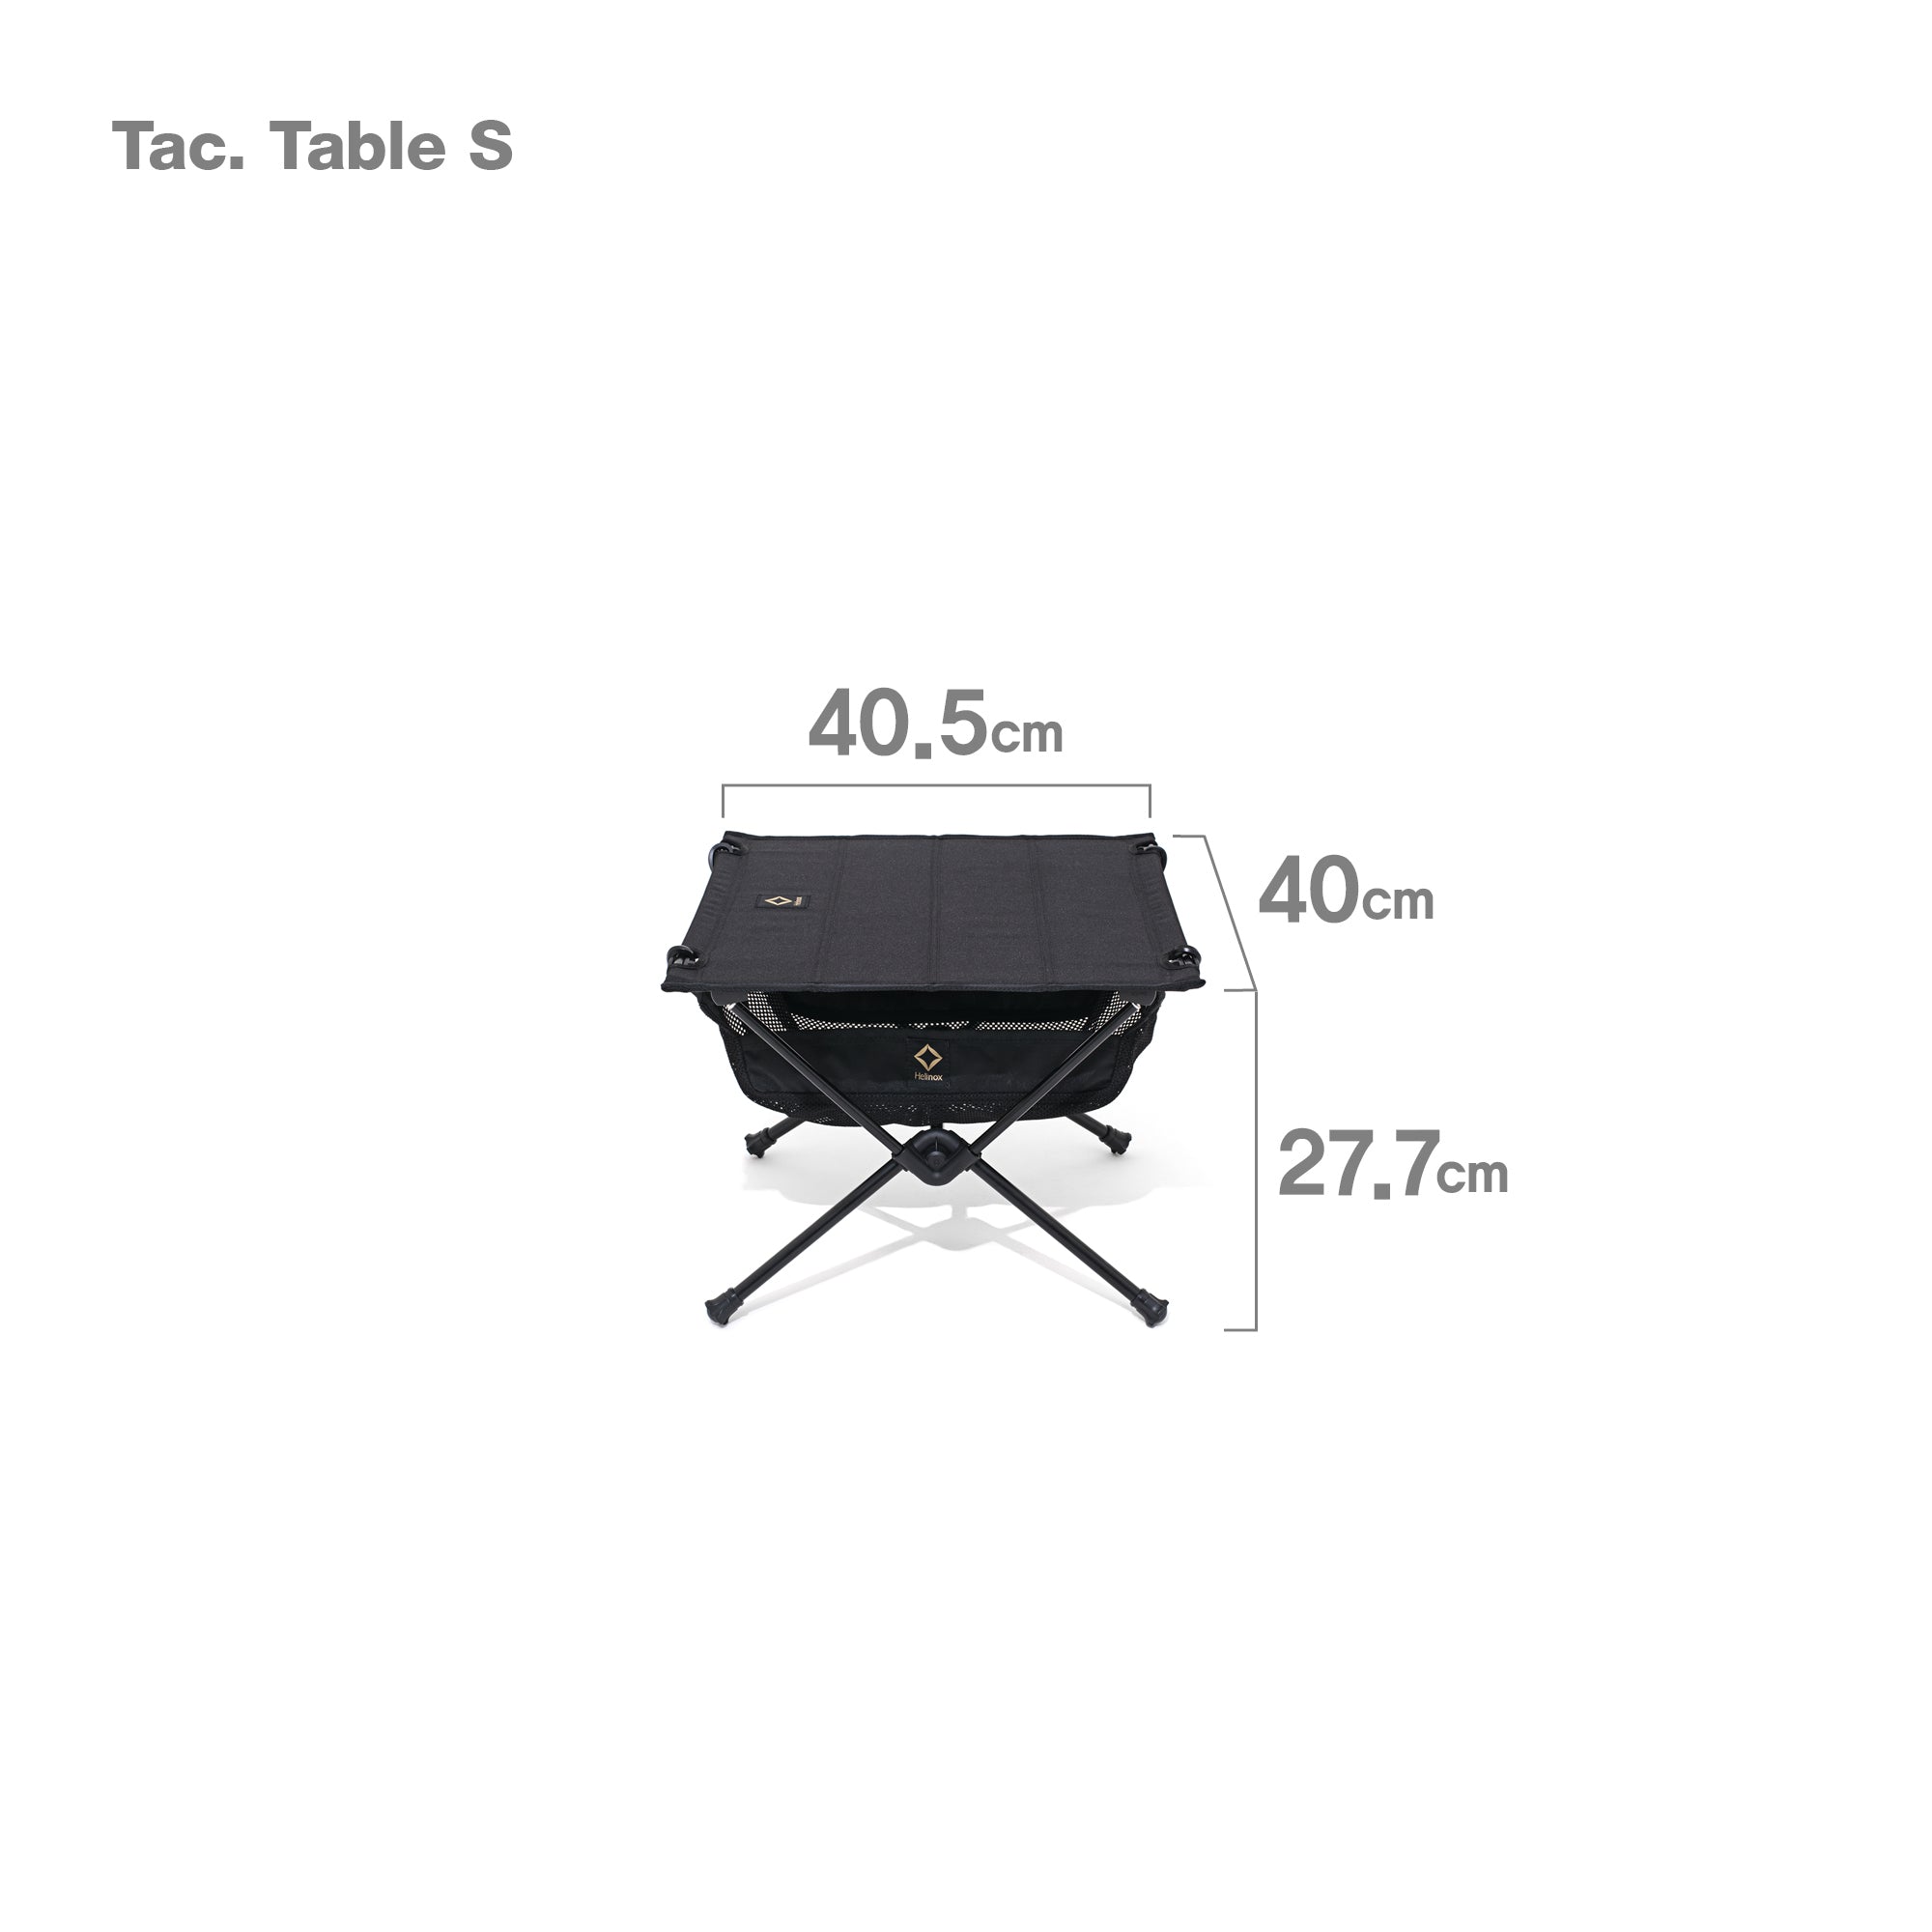 Tac. Table S - Black